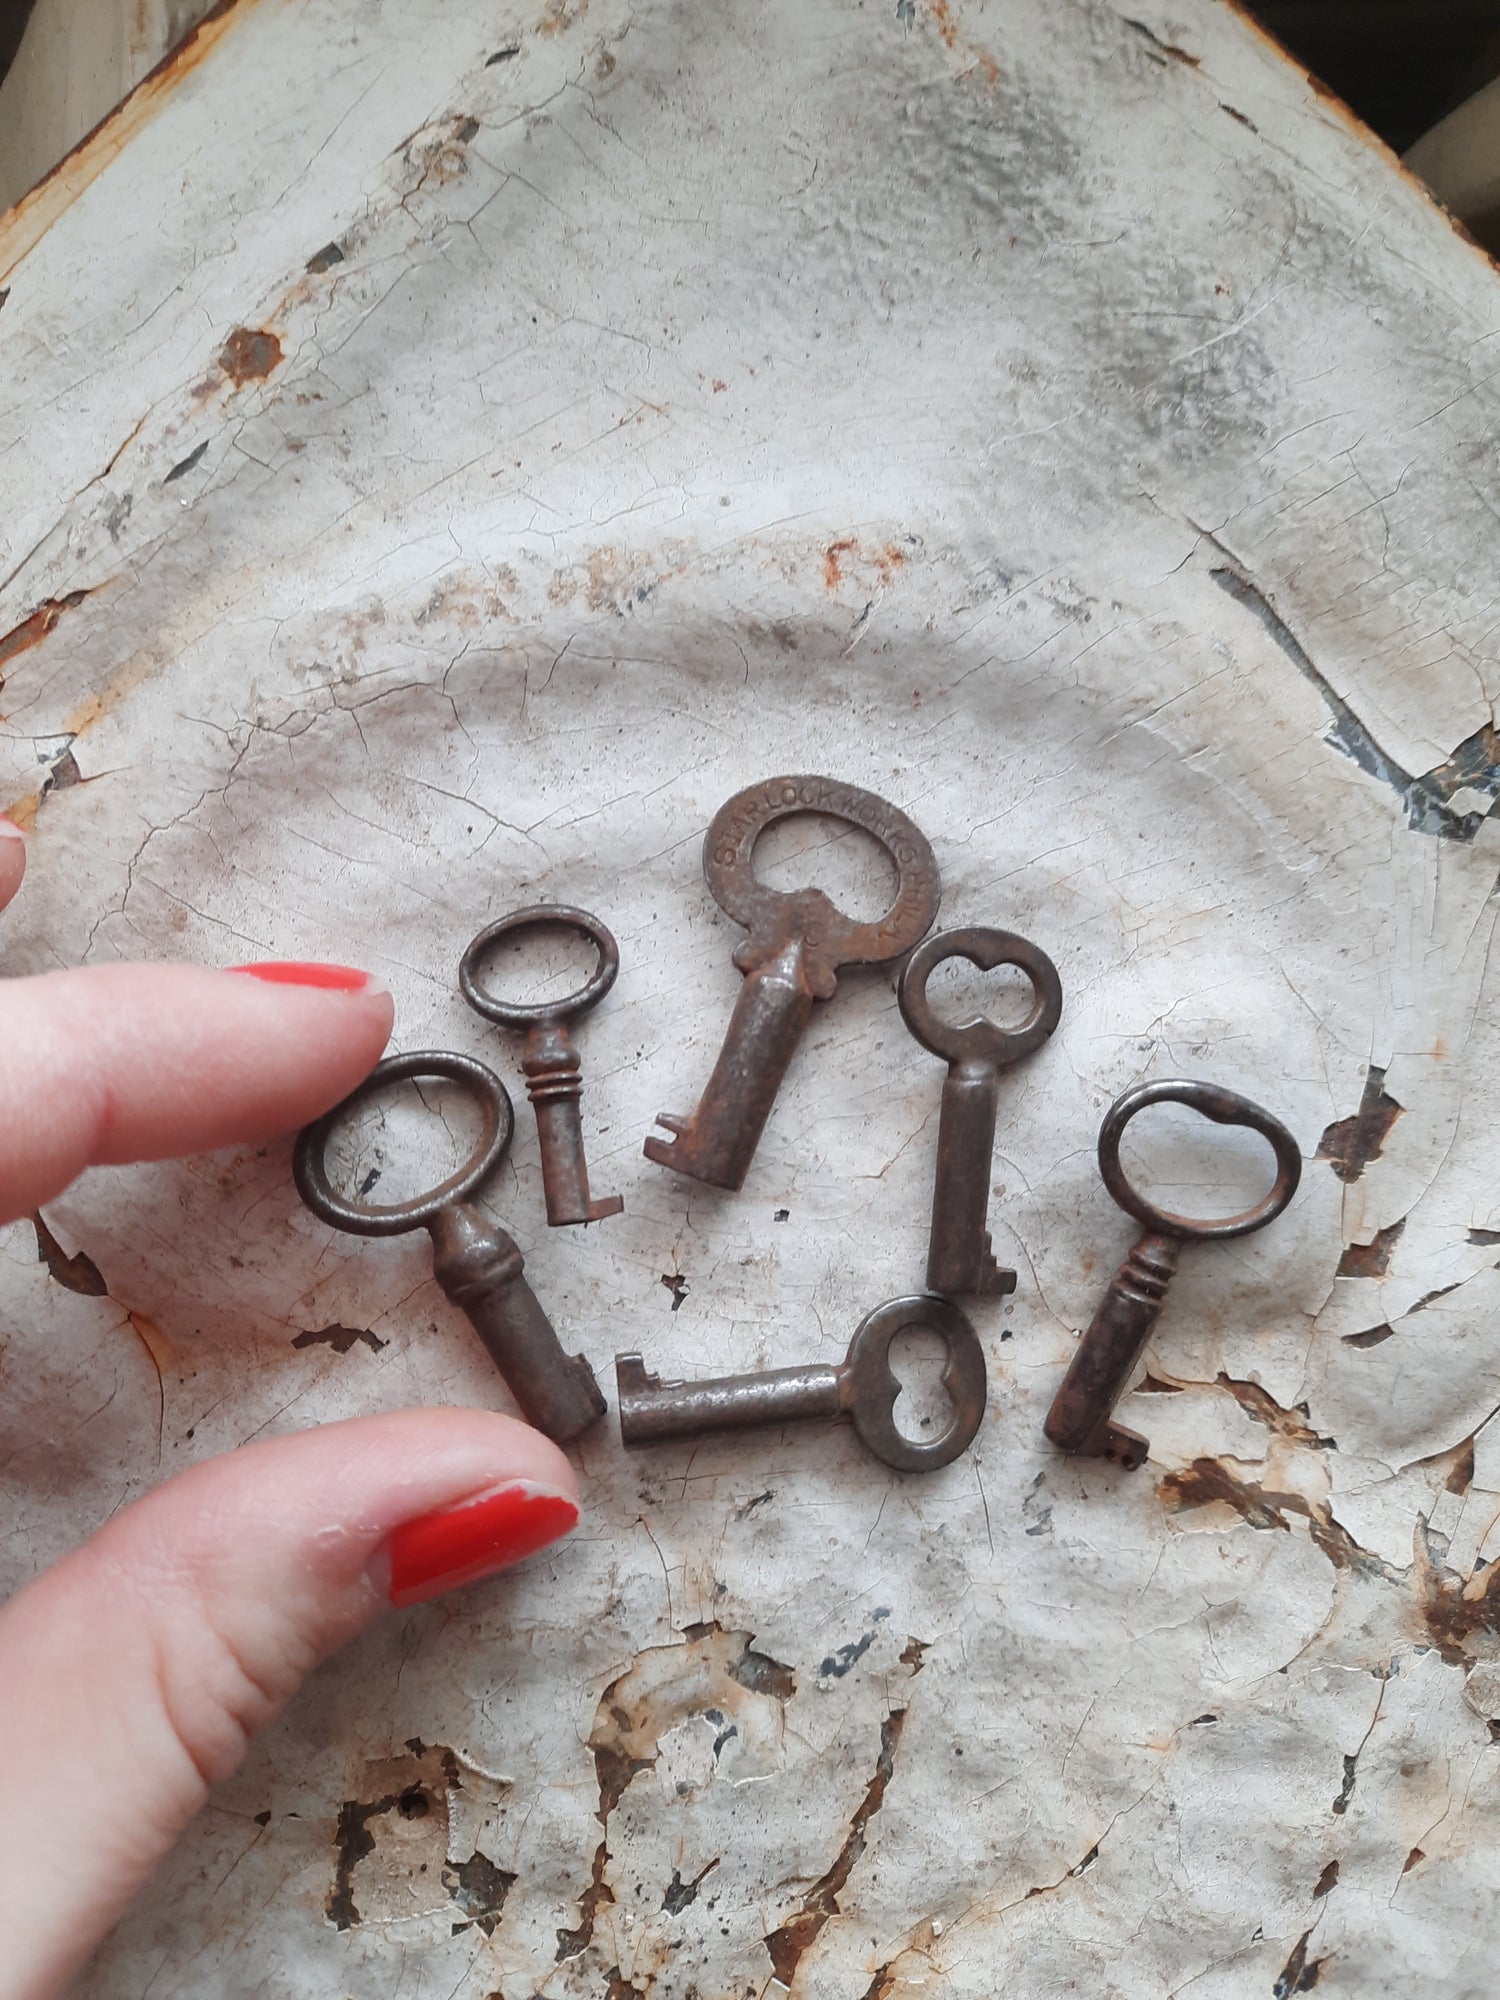 Set of Three Ornate Vintage Keys, Antique Skeleton Key Set 102609